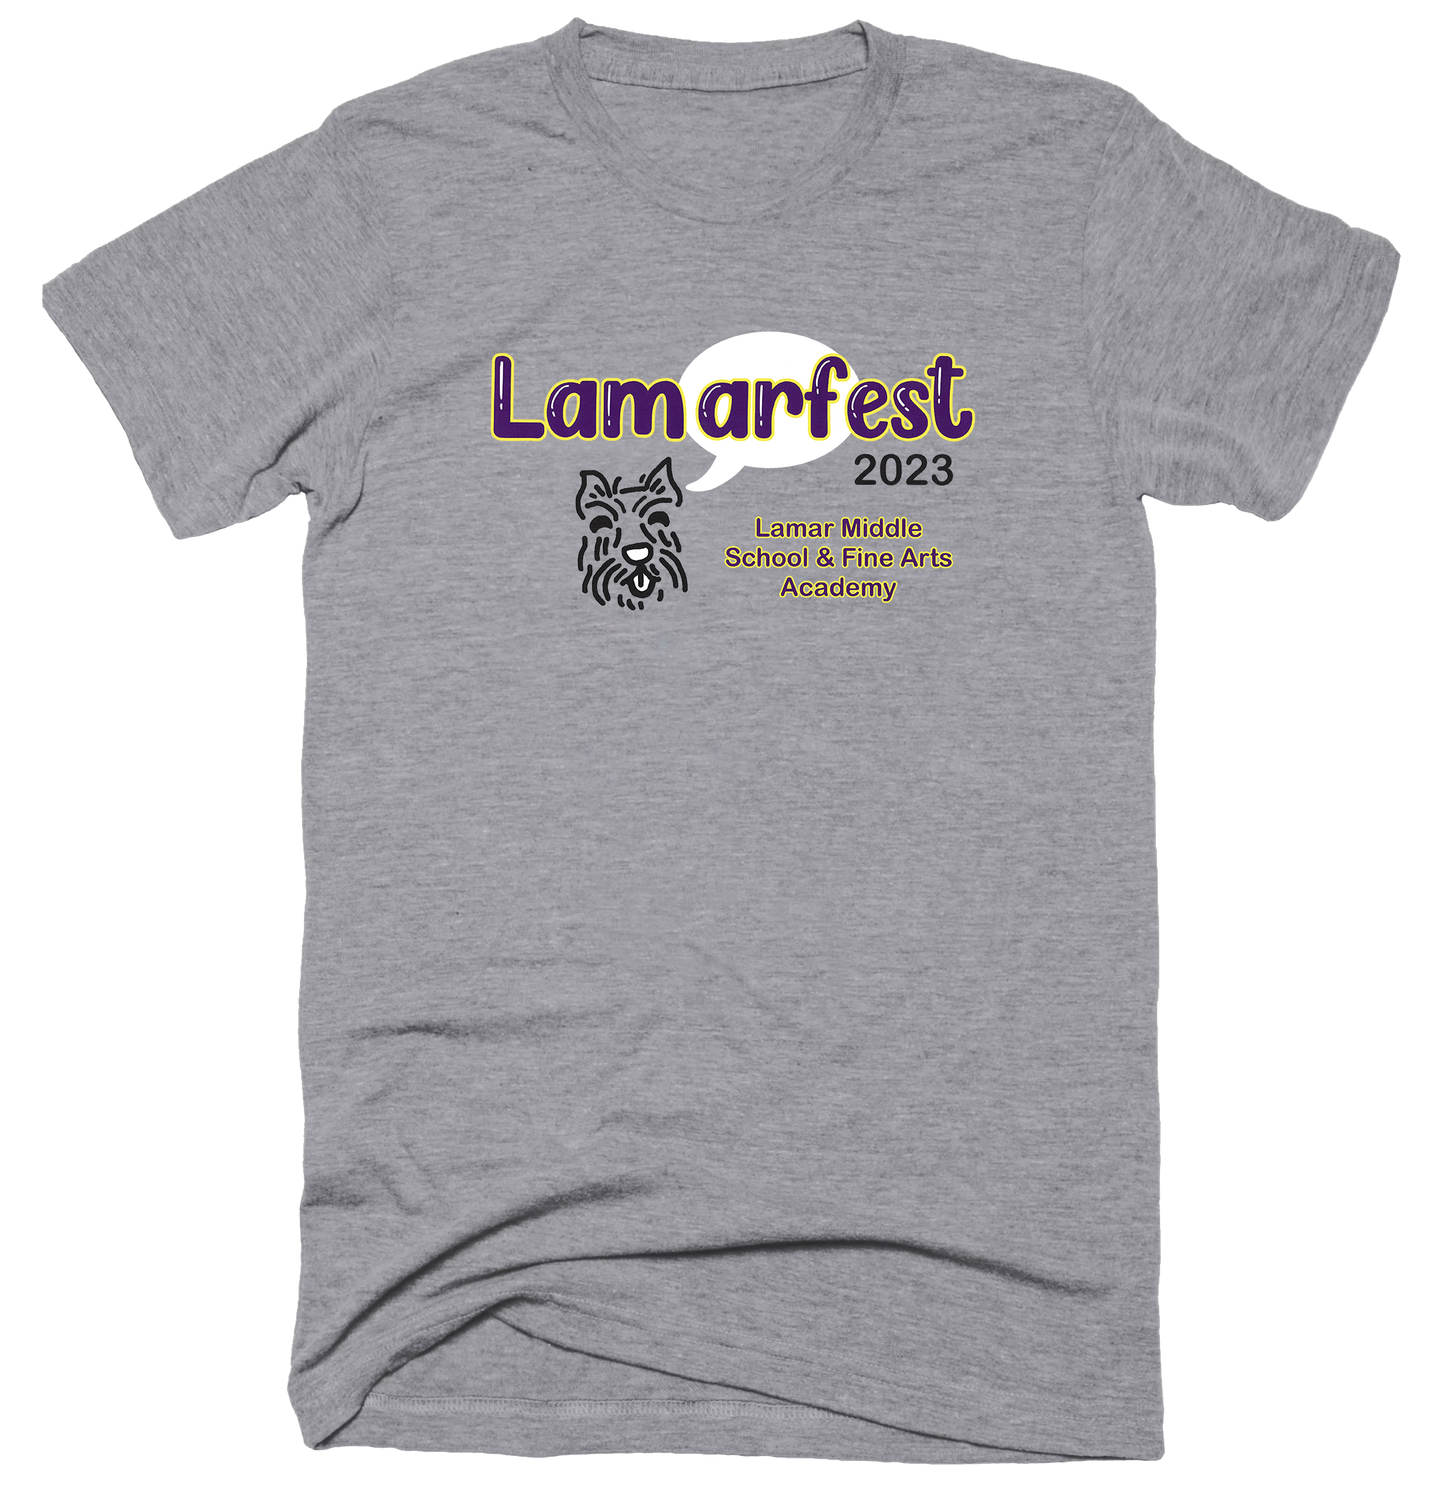 LamarFest 2023 Gray T-Shirt - Student Designed